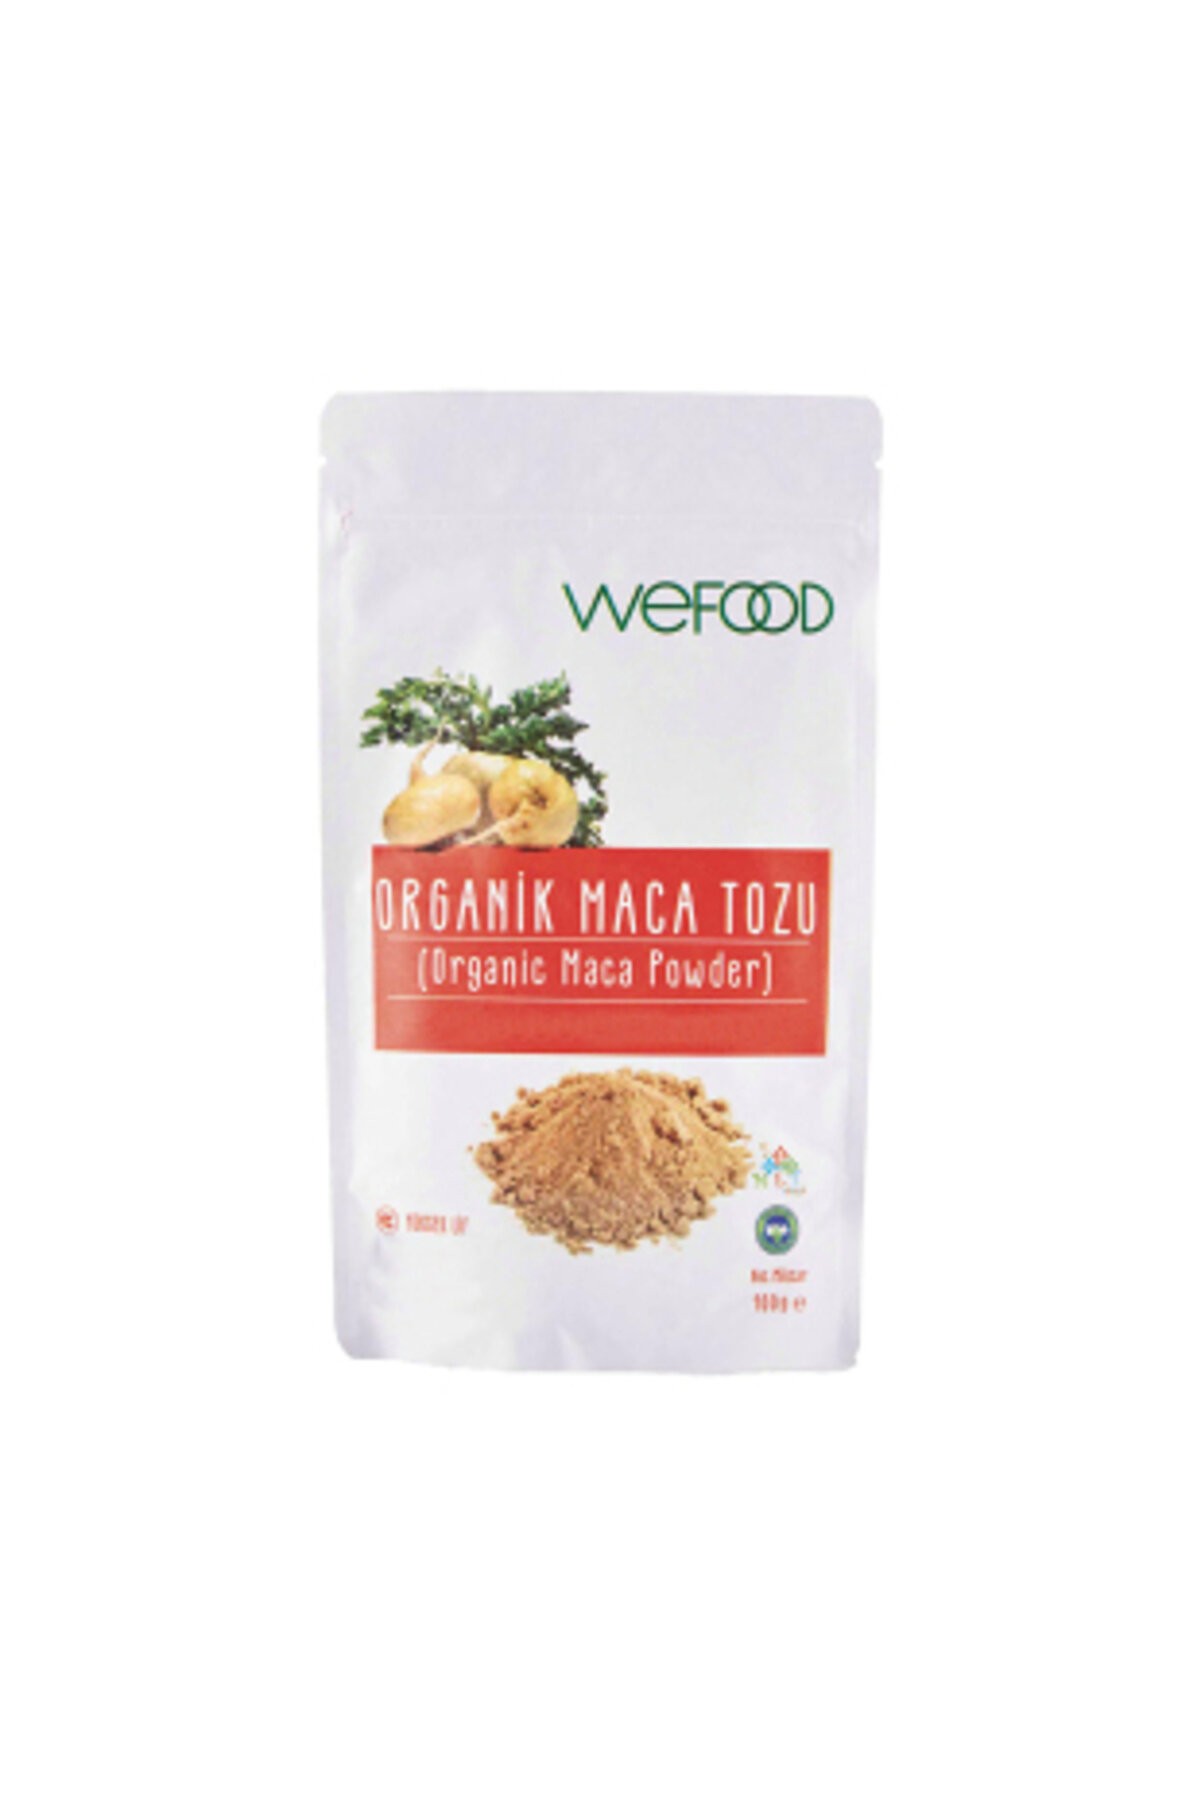 Wefood Organik Maca Tozu 100 gr